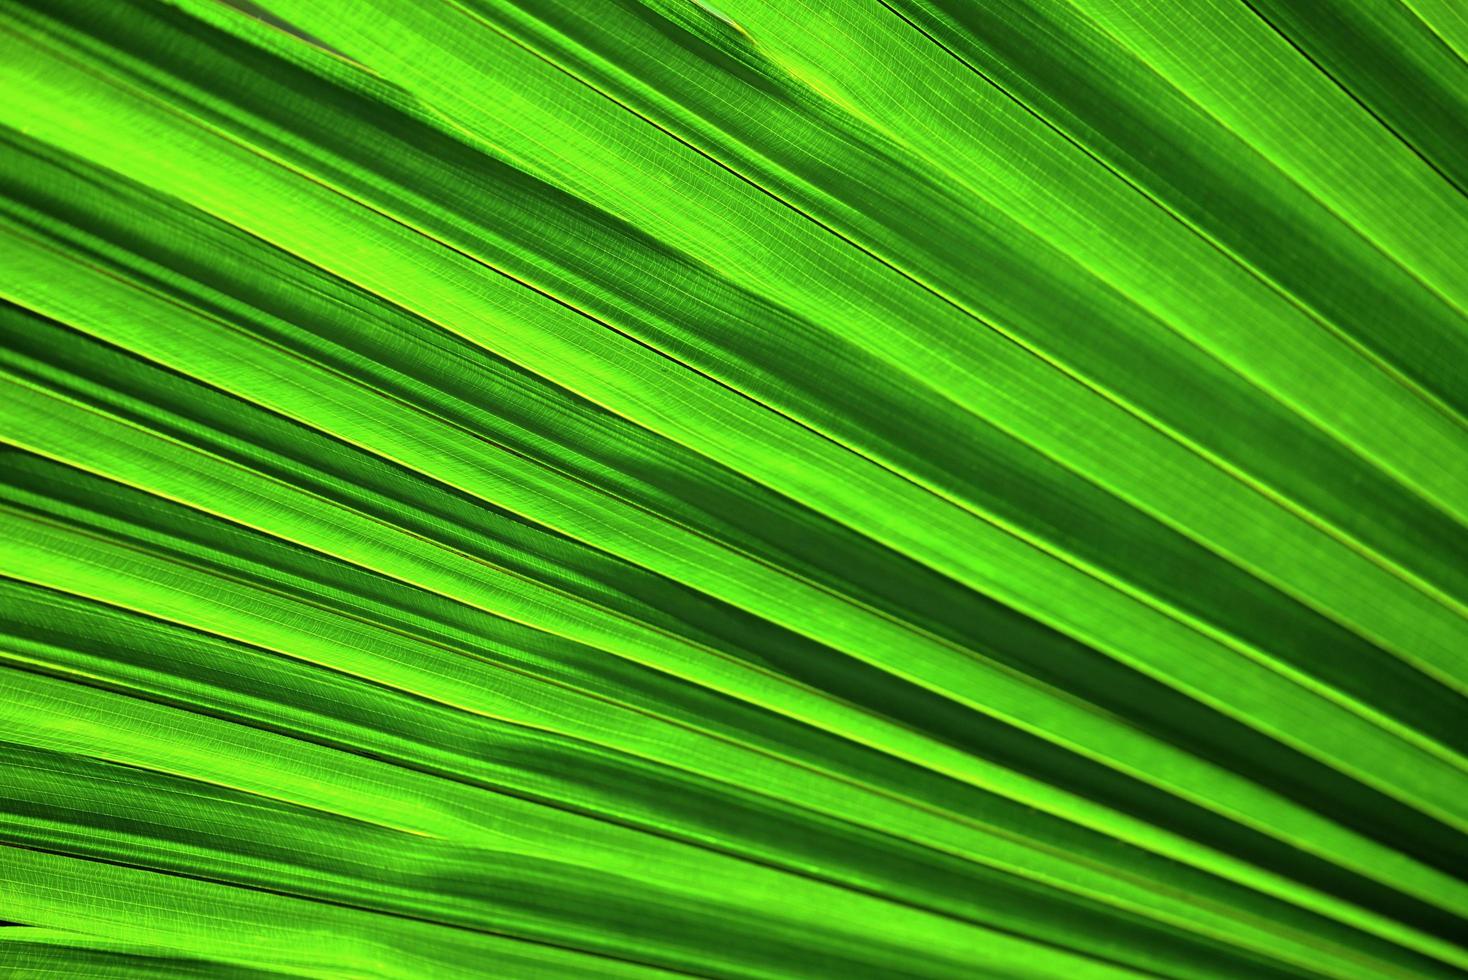 stora palmblad bakgrund, träd unga gröna palmblad naturlig grön textur bakgrund foto